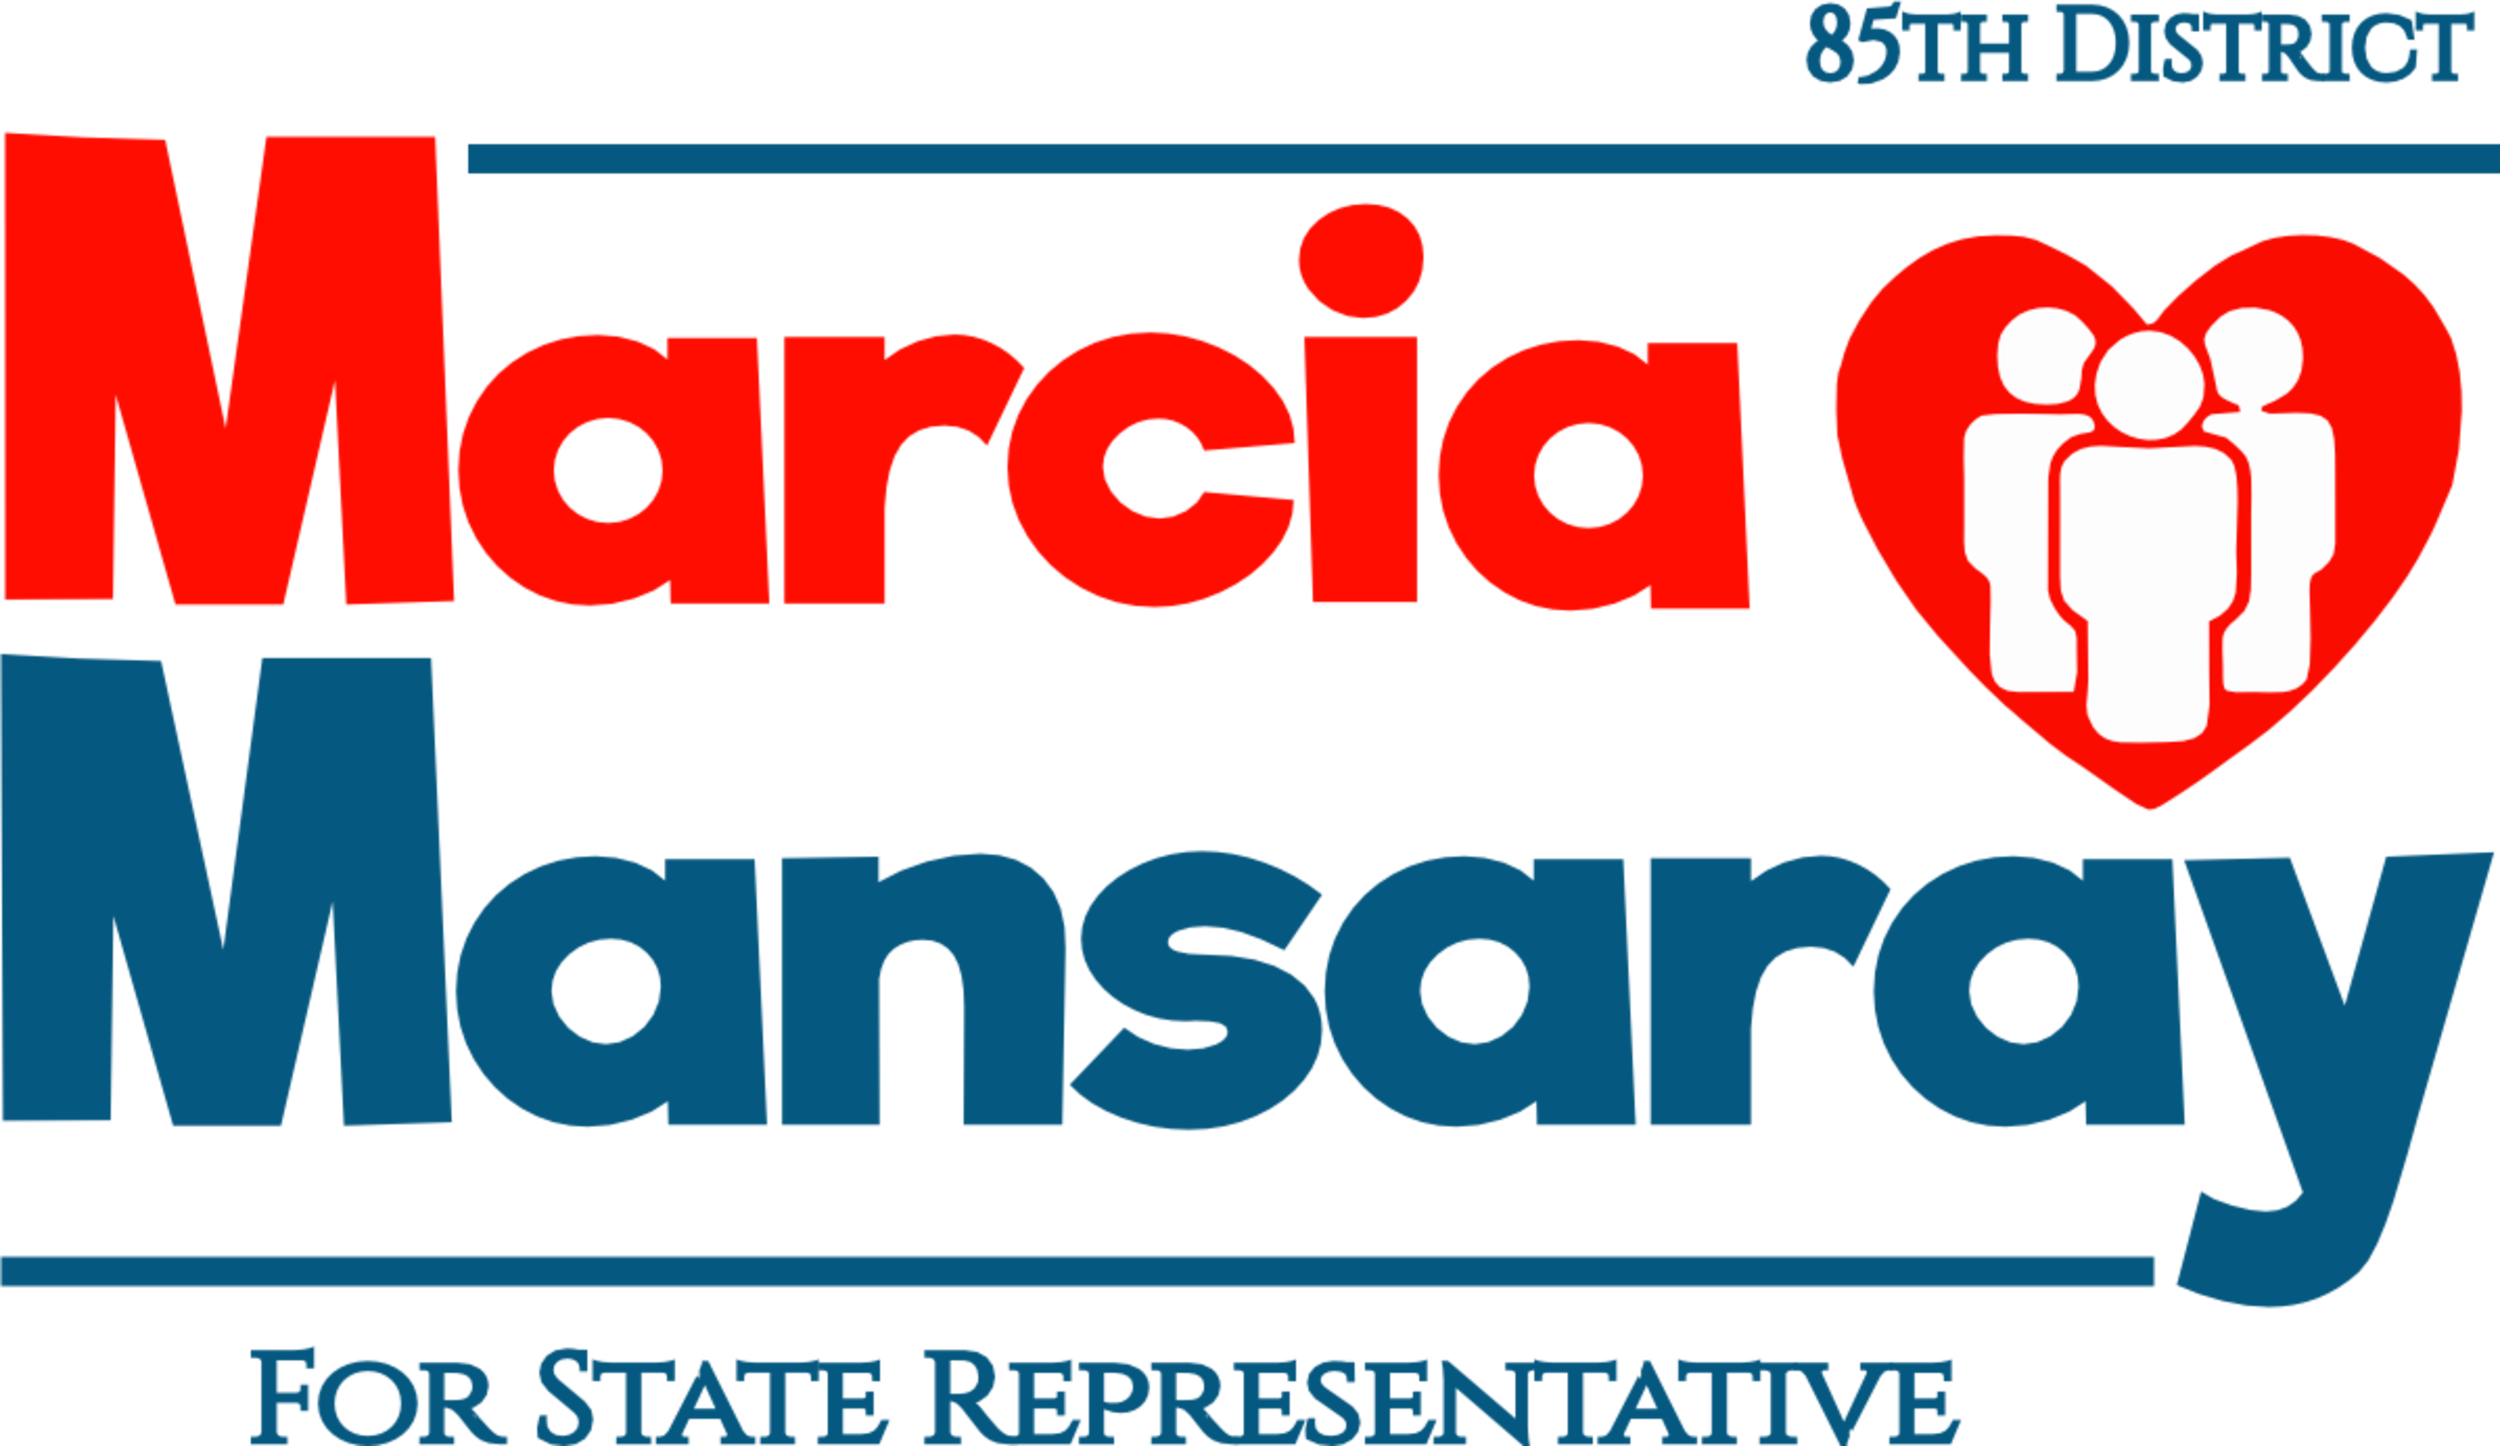 Marcia Mansaray. For State Representative. 85th District